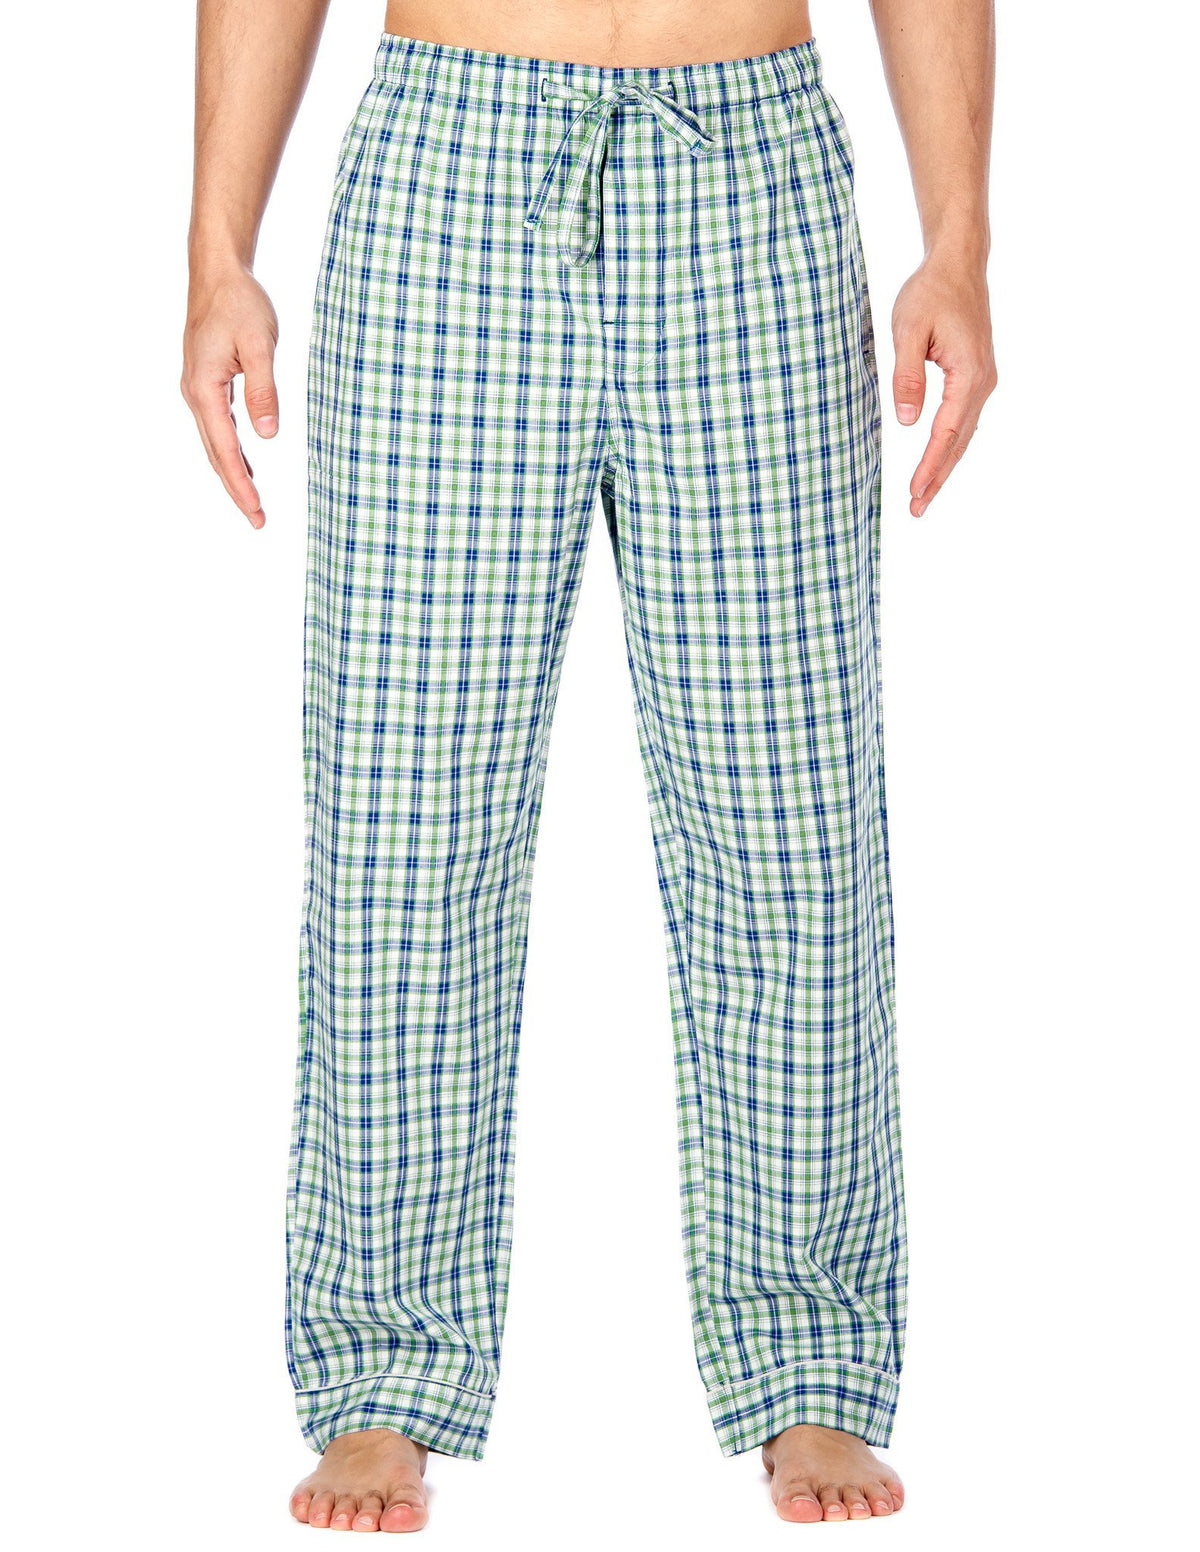 Men's Bamboo Sleep/Lounge Pants - Plaid Blue-Green